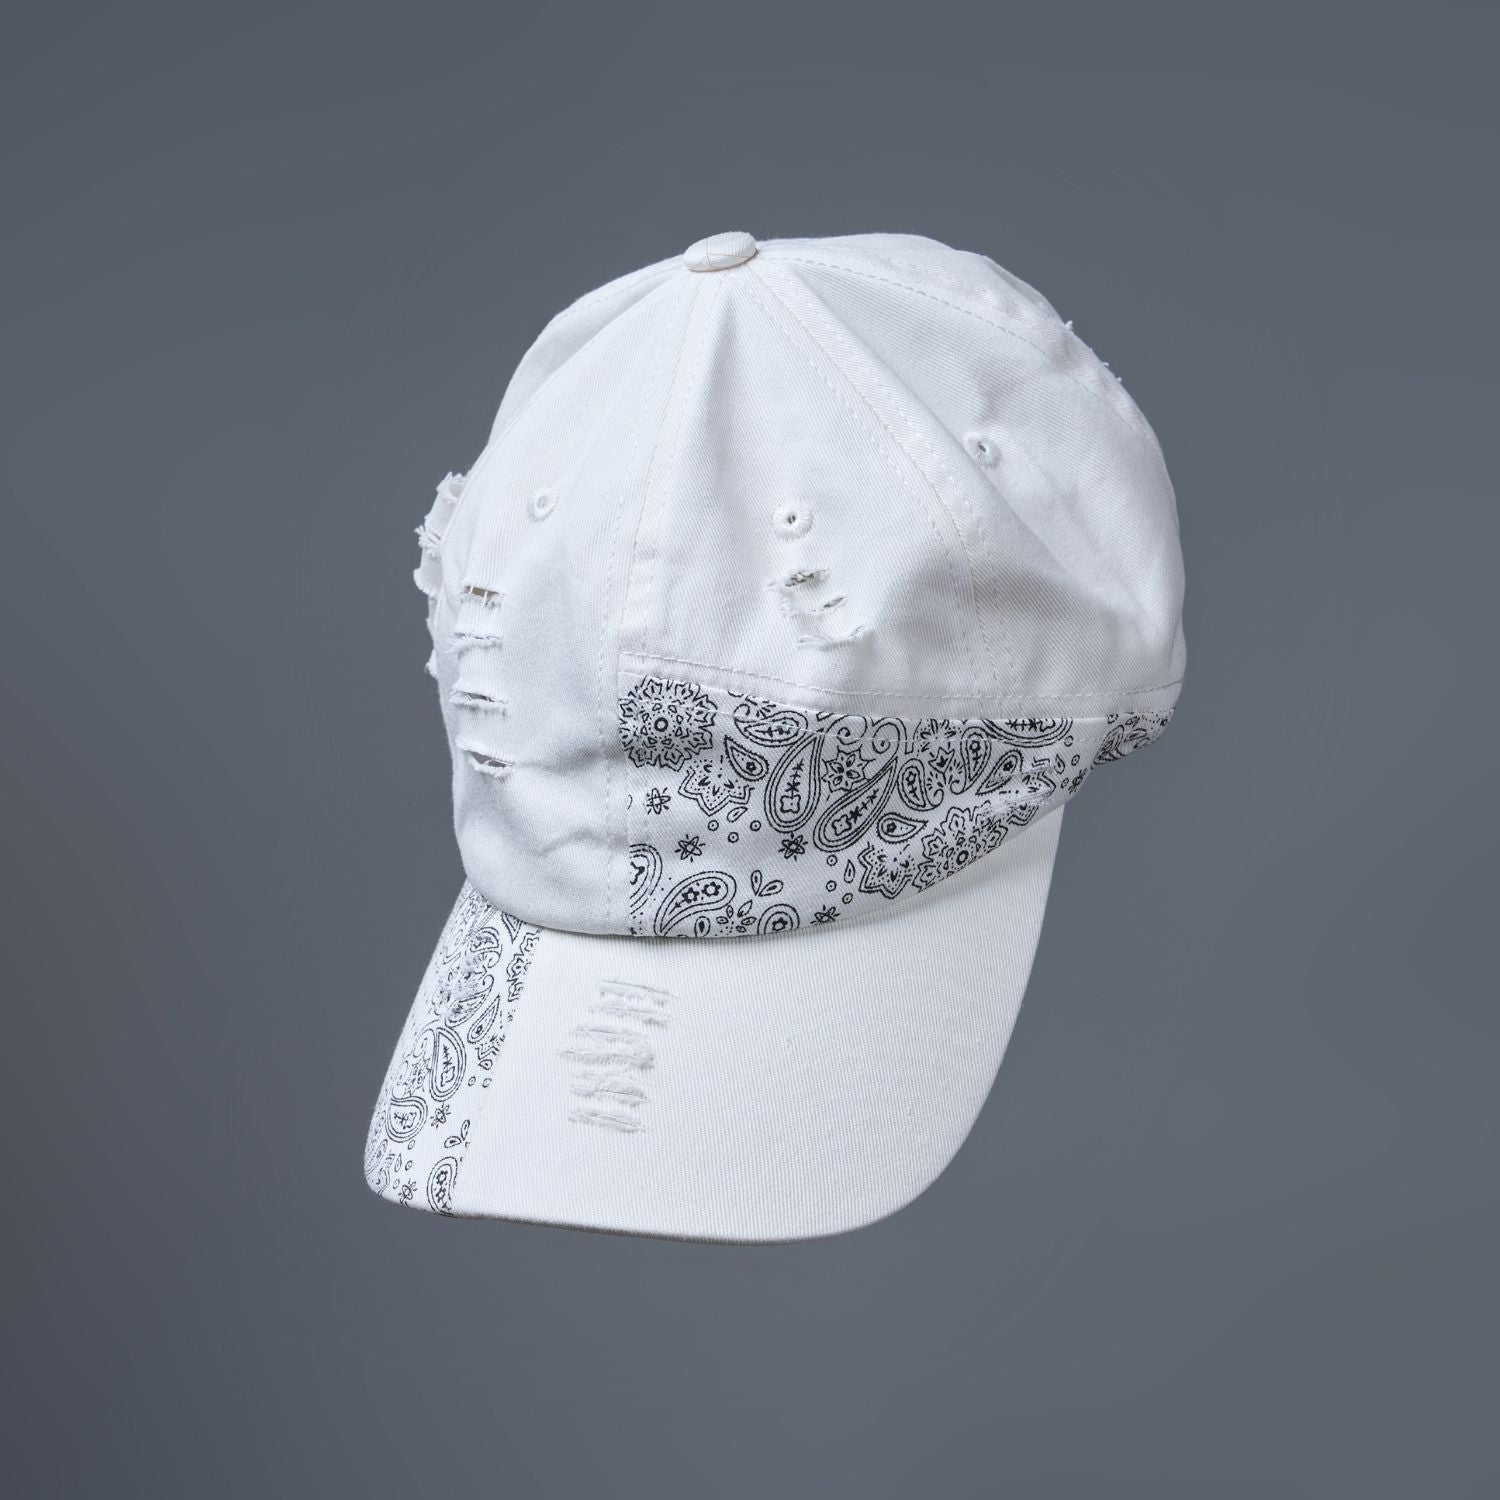 white colored, wide brim designer cap for men with adjustable strap.